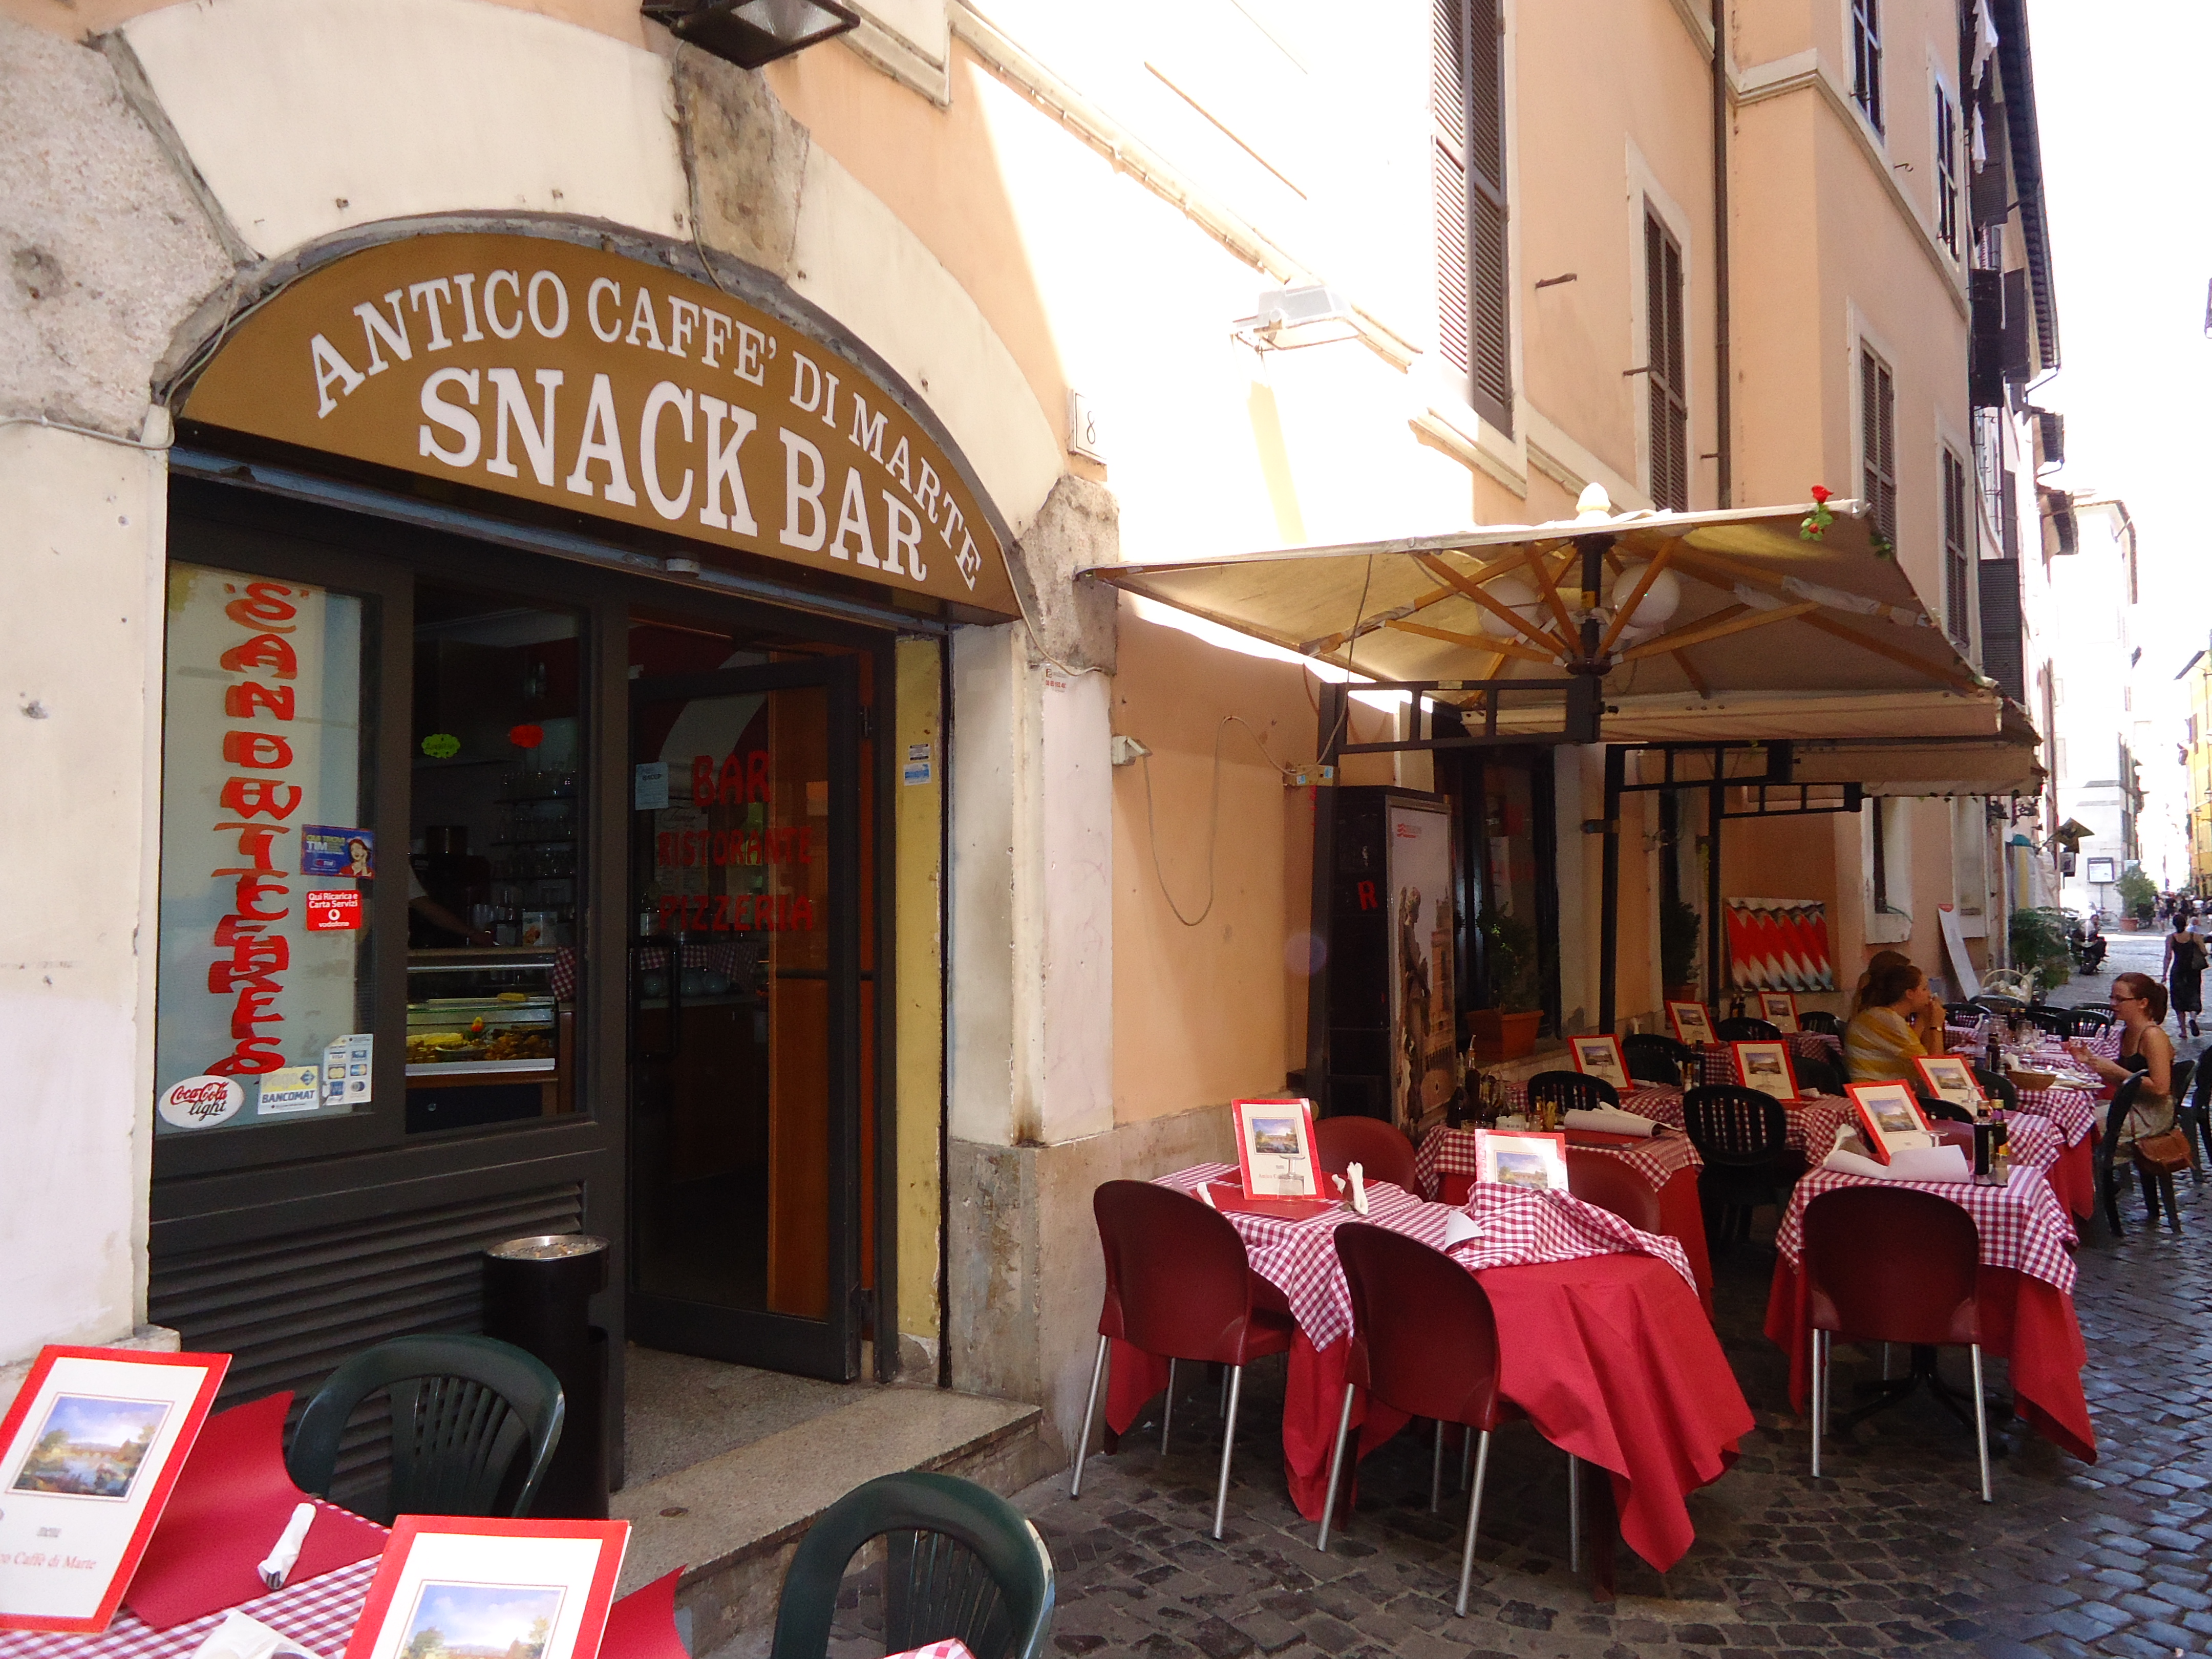 Antico Caffe Di Marte - Snack Bar - Restaurant - Engelenburcht - Engelenbrug - Tiber - Rome